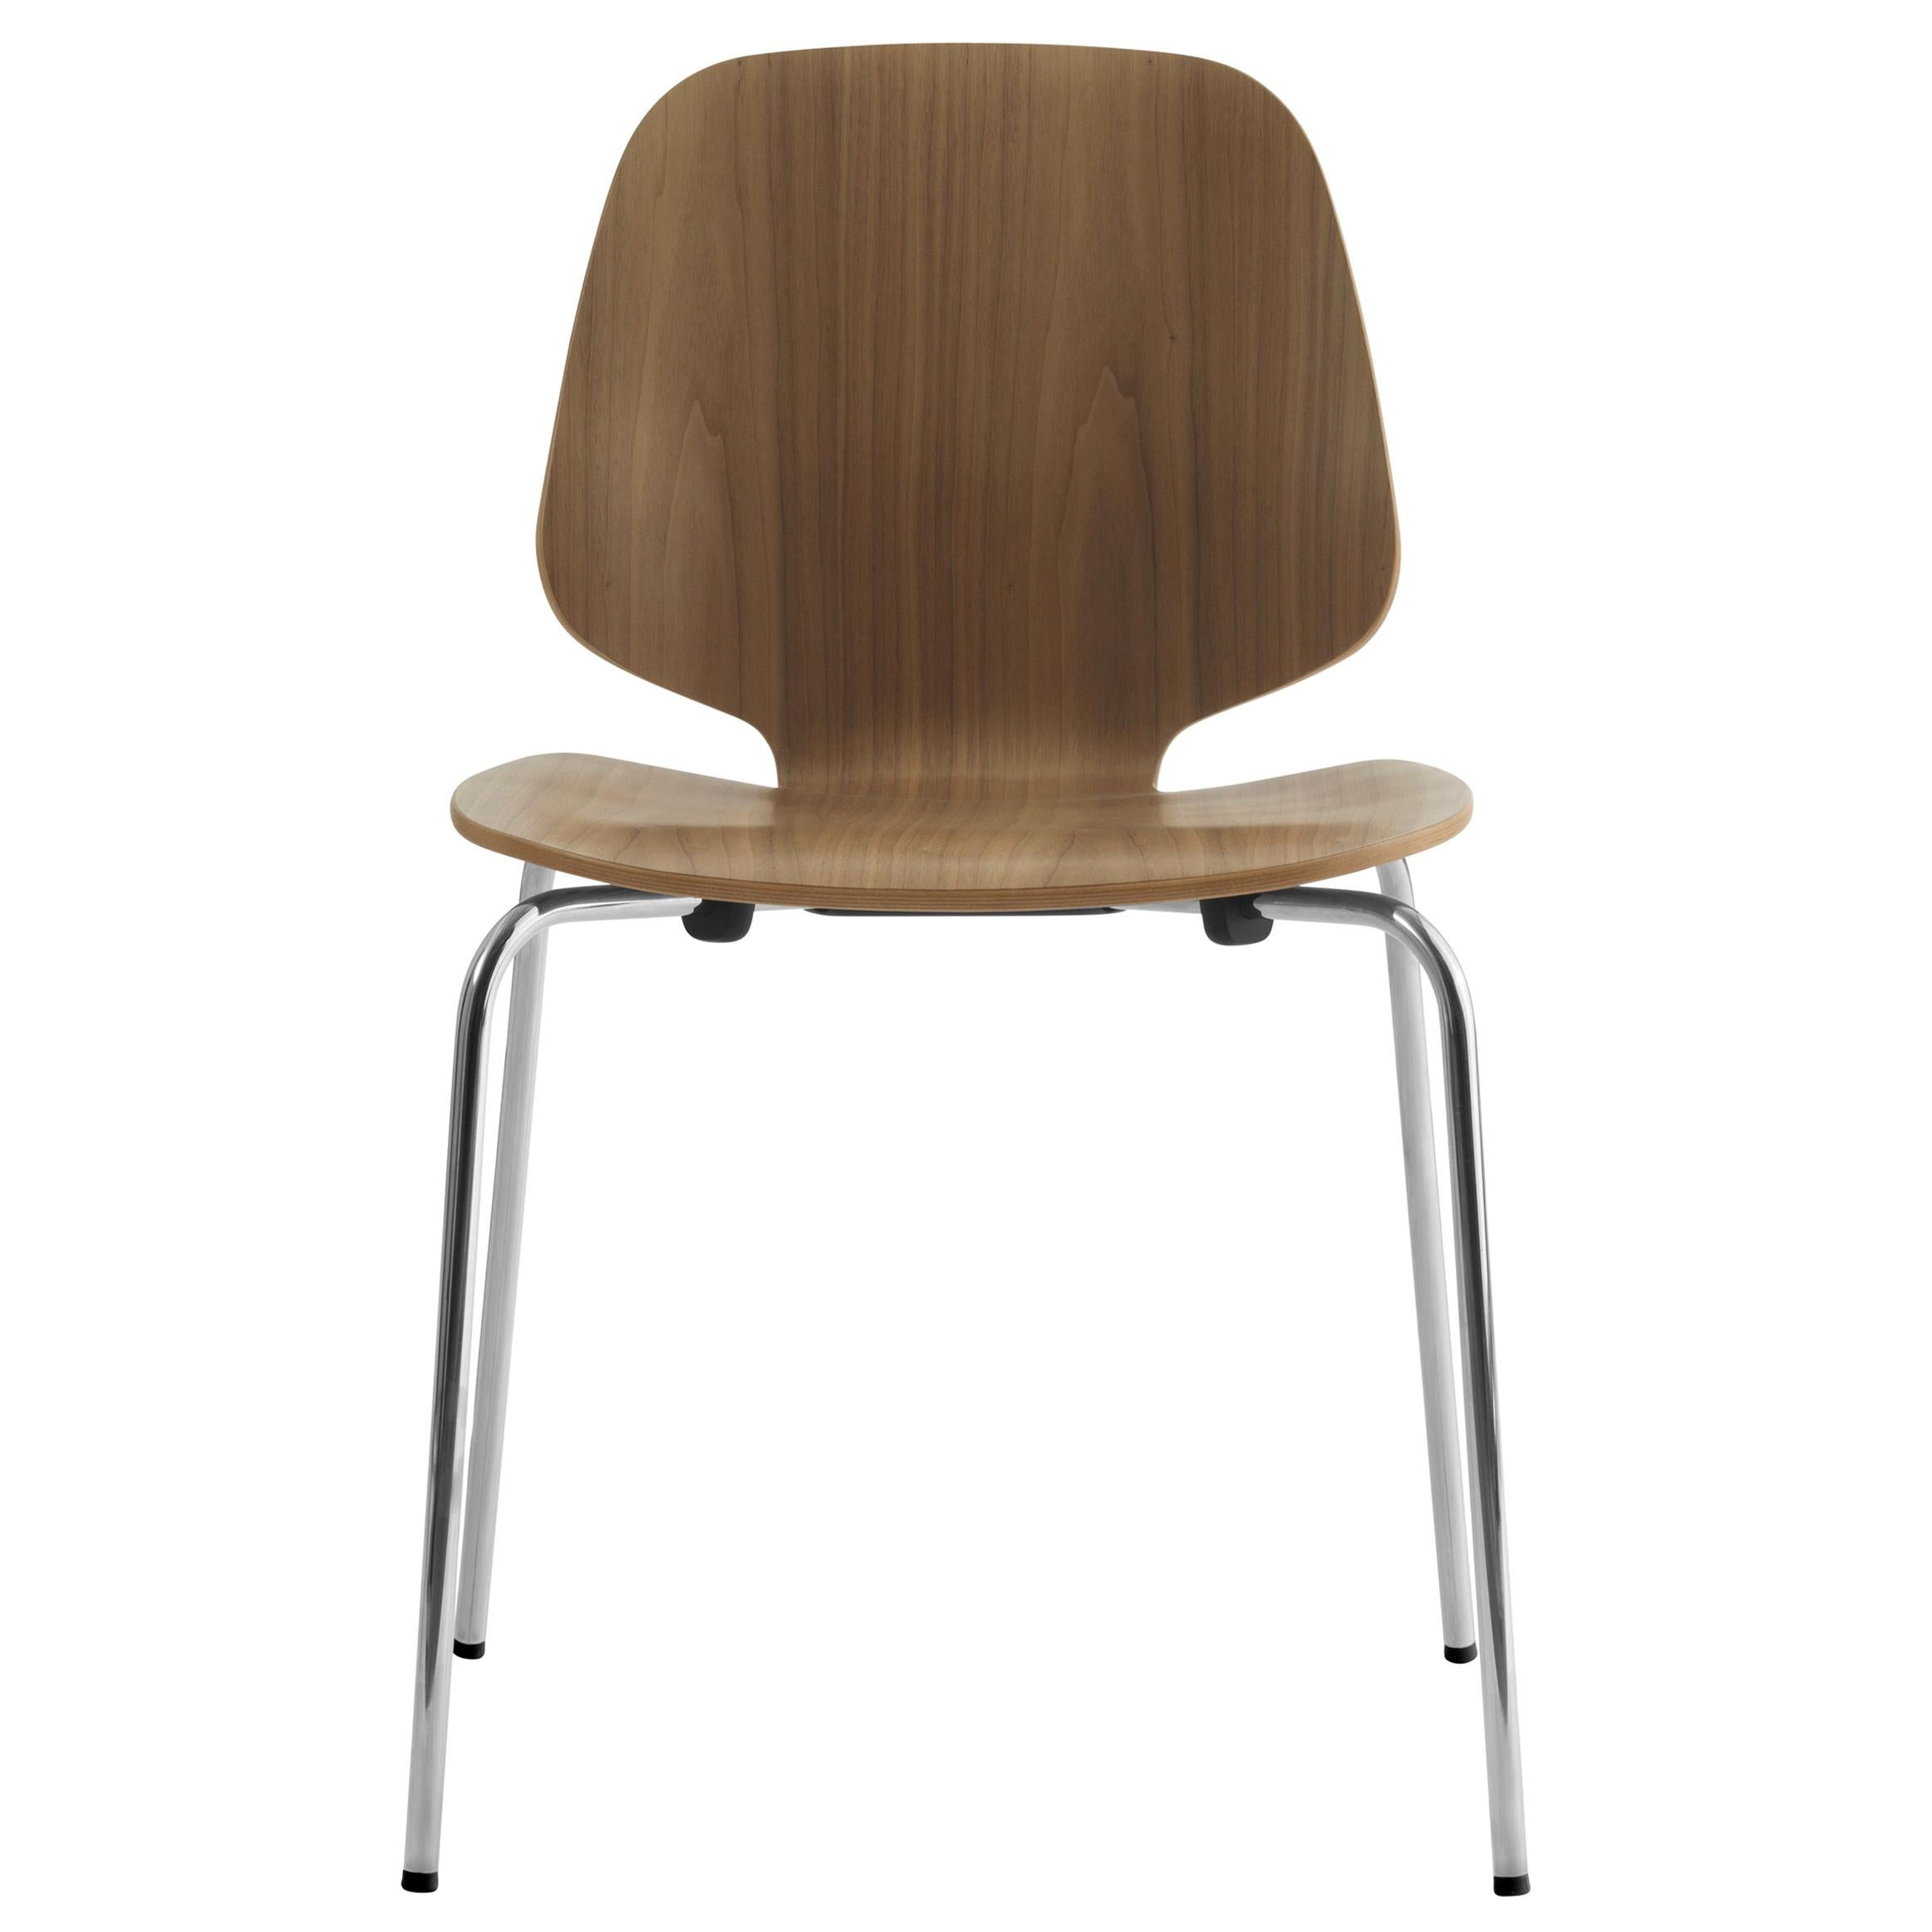 For Sale: Brown (My Chair Walnut) Normann Copenhagen My Chair with Chrome Base by Nicholai Wiig Hansen